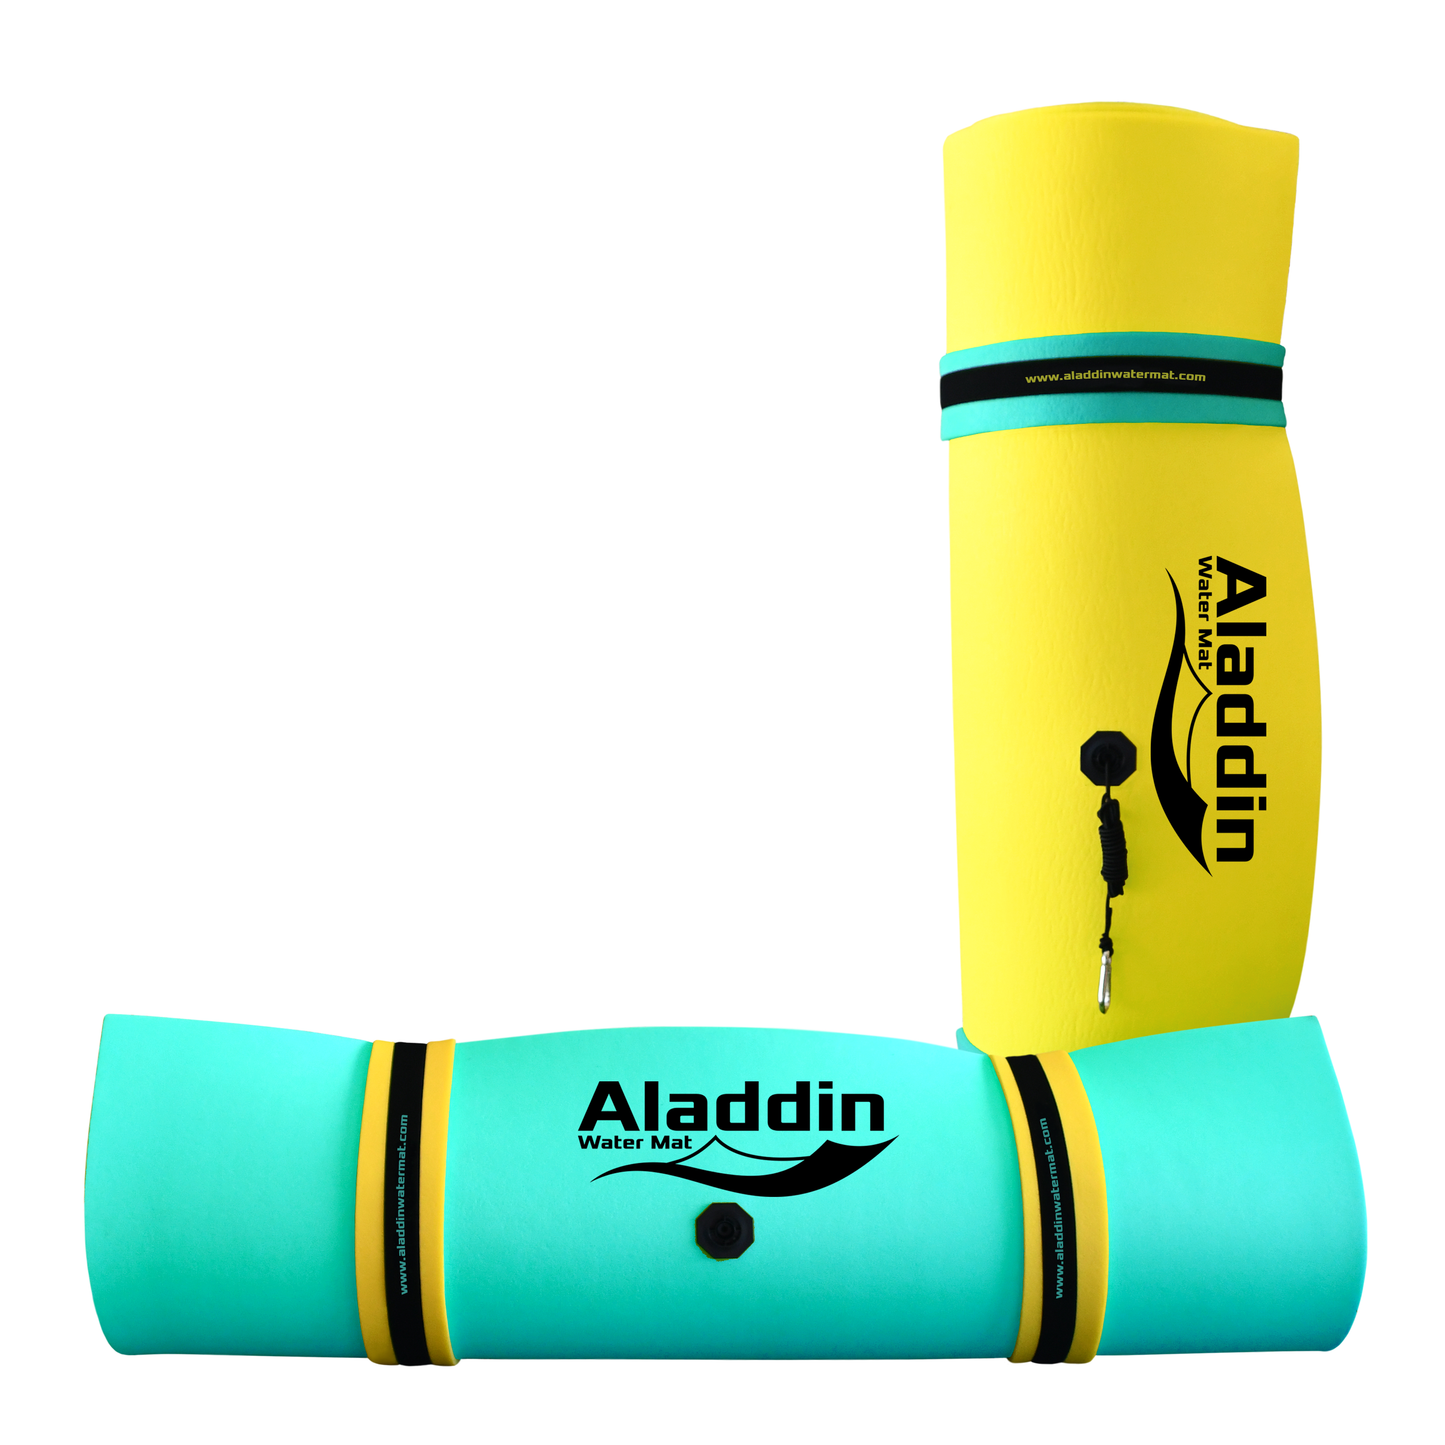 Aladdin Water Mat™ (12x6) Floating Water Mat, Premium Foam (Green/Black/Yellow)